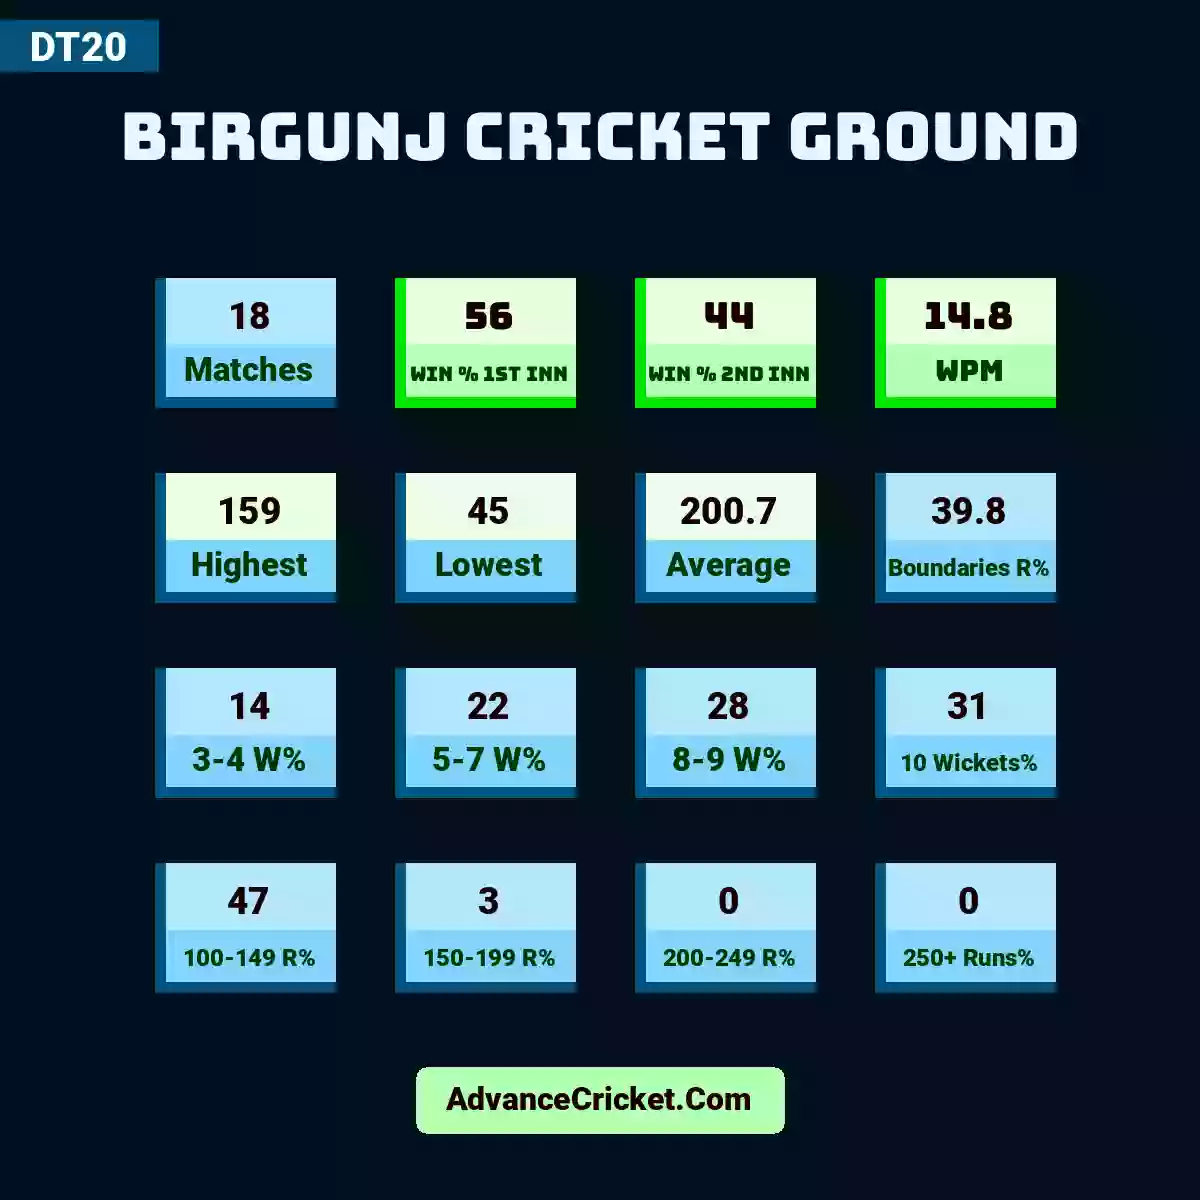 Image showing Birgunj Cricket Ground with Matches: 18, Win % 1st Inn: 56, Win % 2nd Inn: 44, WPM: 14.8, Highest: 159, Lowest: 45, Average: 200.7, Boundaries R%: 39.8, 3-4 W%: 14, 5-7 W%: 22, 8-9 W%: 28, 10 Wickets%: 31, 100-149 R%: 47, 150-199 R%: 3, 200-249 R%: 0, 250+ Runs%: 0.